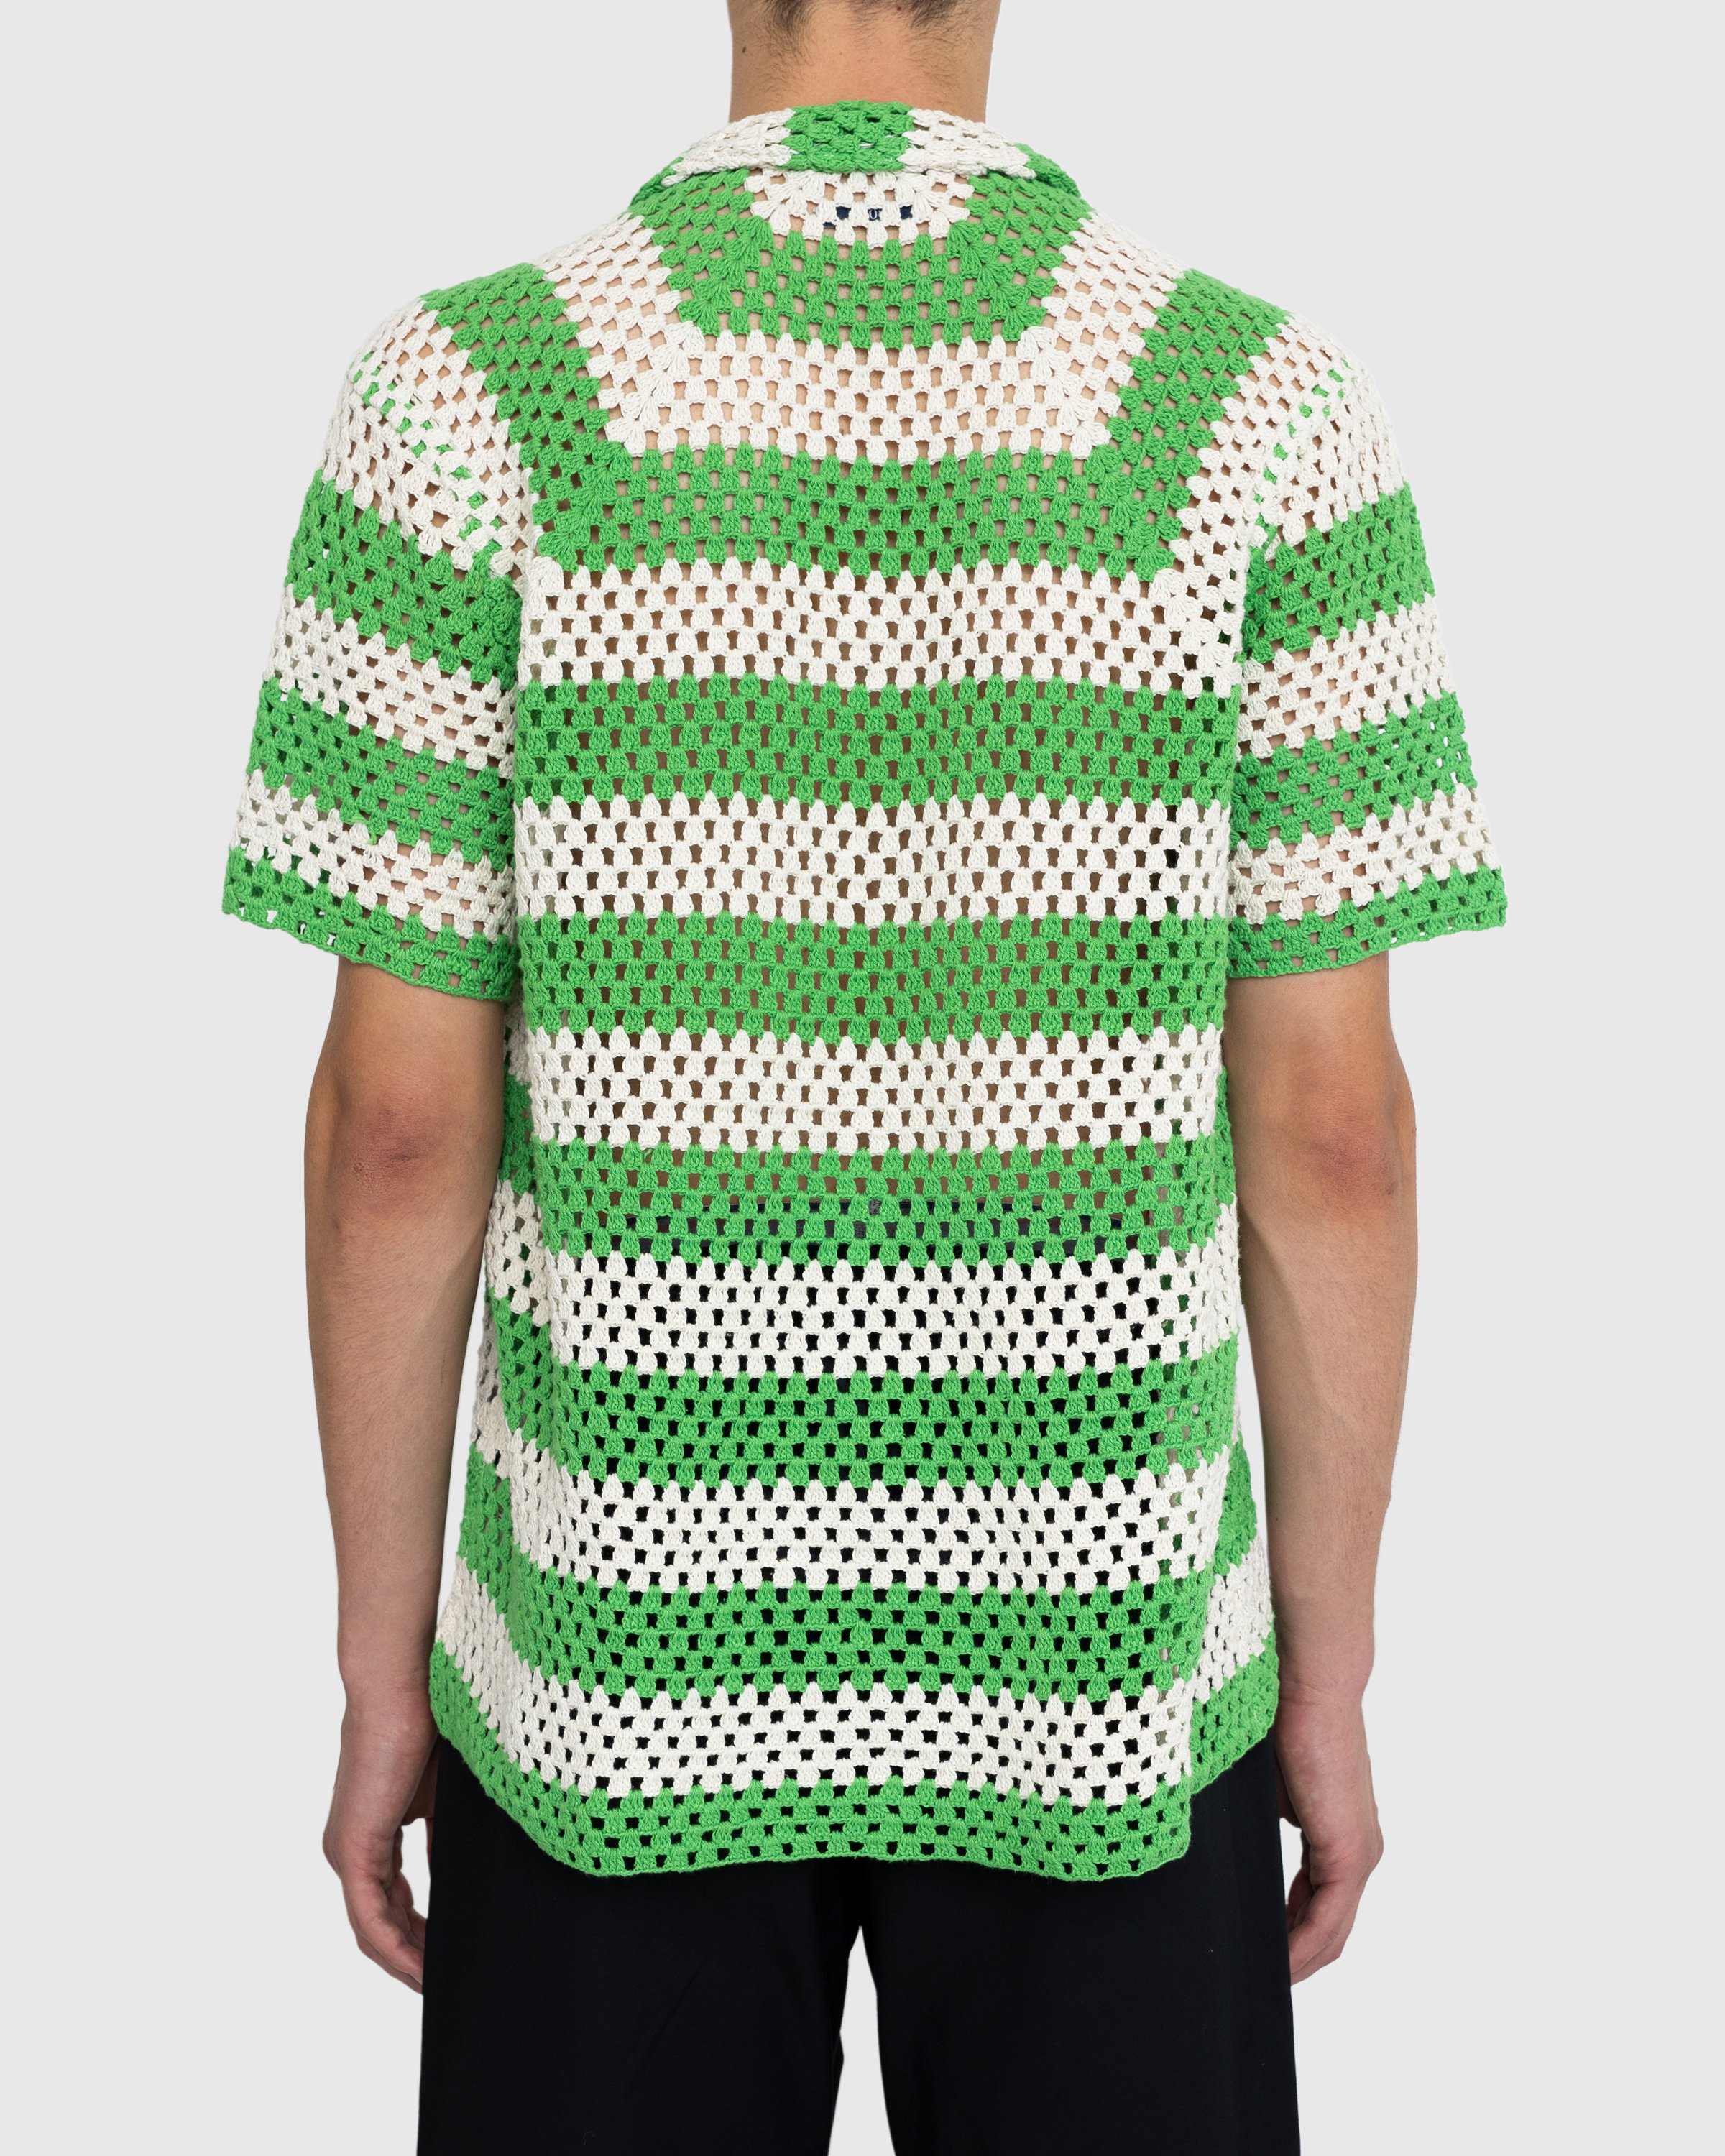 Bode - Crochet Shirt Green - Clothing - Green - Image 4